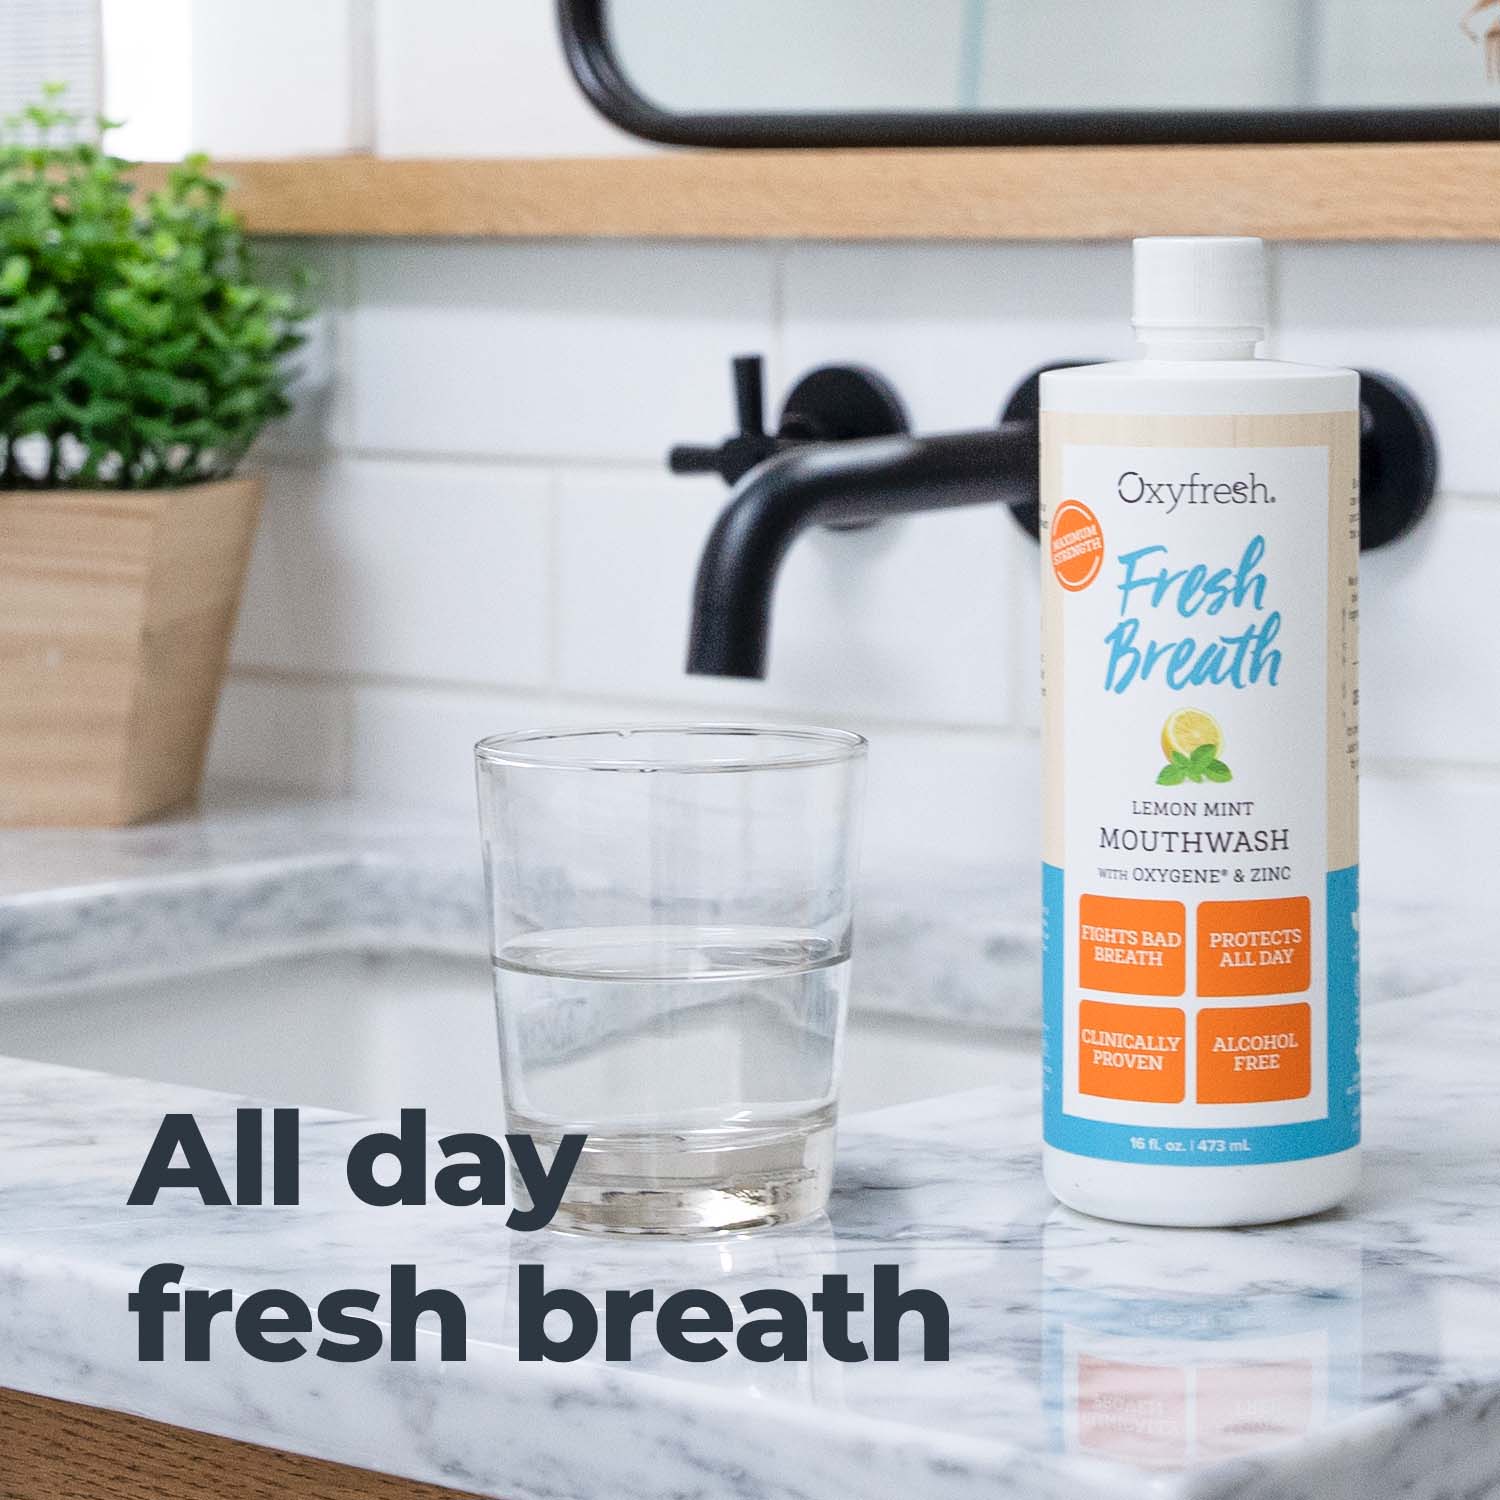 oxyfresh fresh breath lemon mint mouthwash provides all day fresh breath mouthwash and rinsing glass on a bathroom countertop